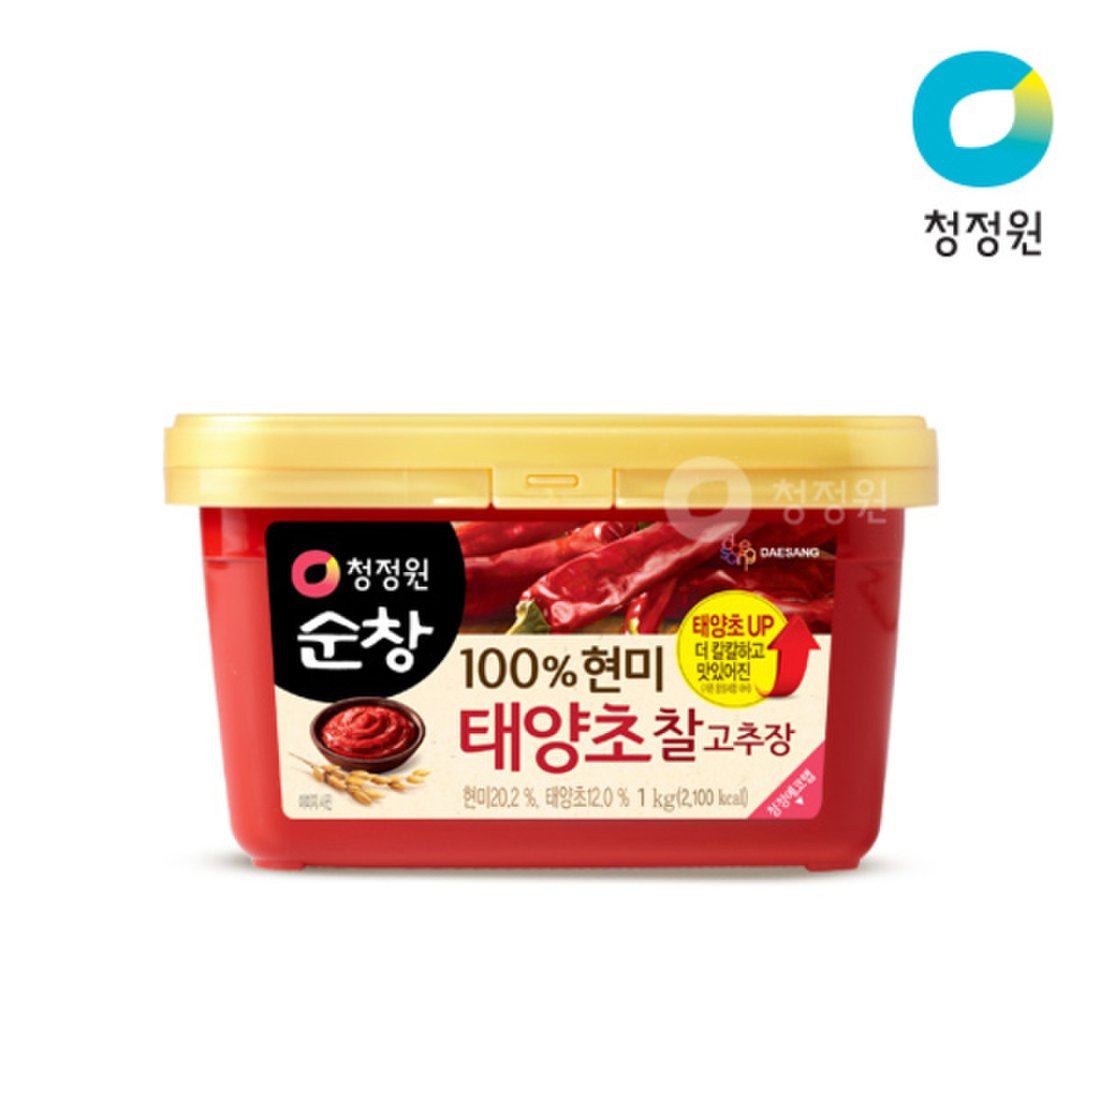 Chungjungone Brown rice red pepper paste 1kg/청정원 현미 태양초 찰고추장 1KG